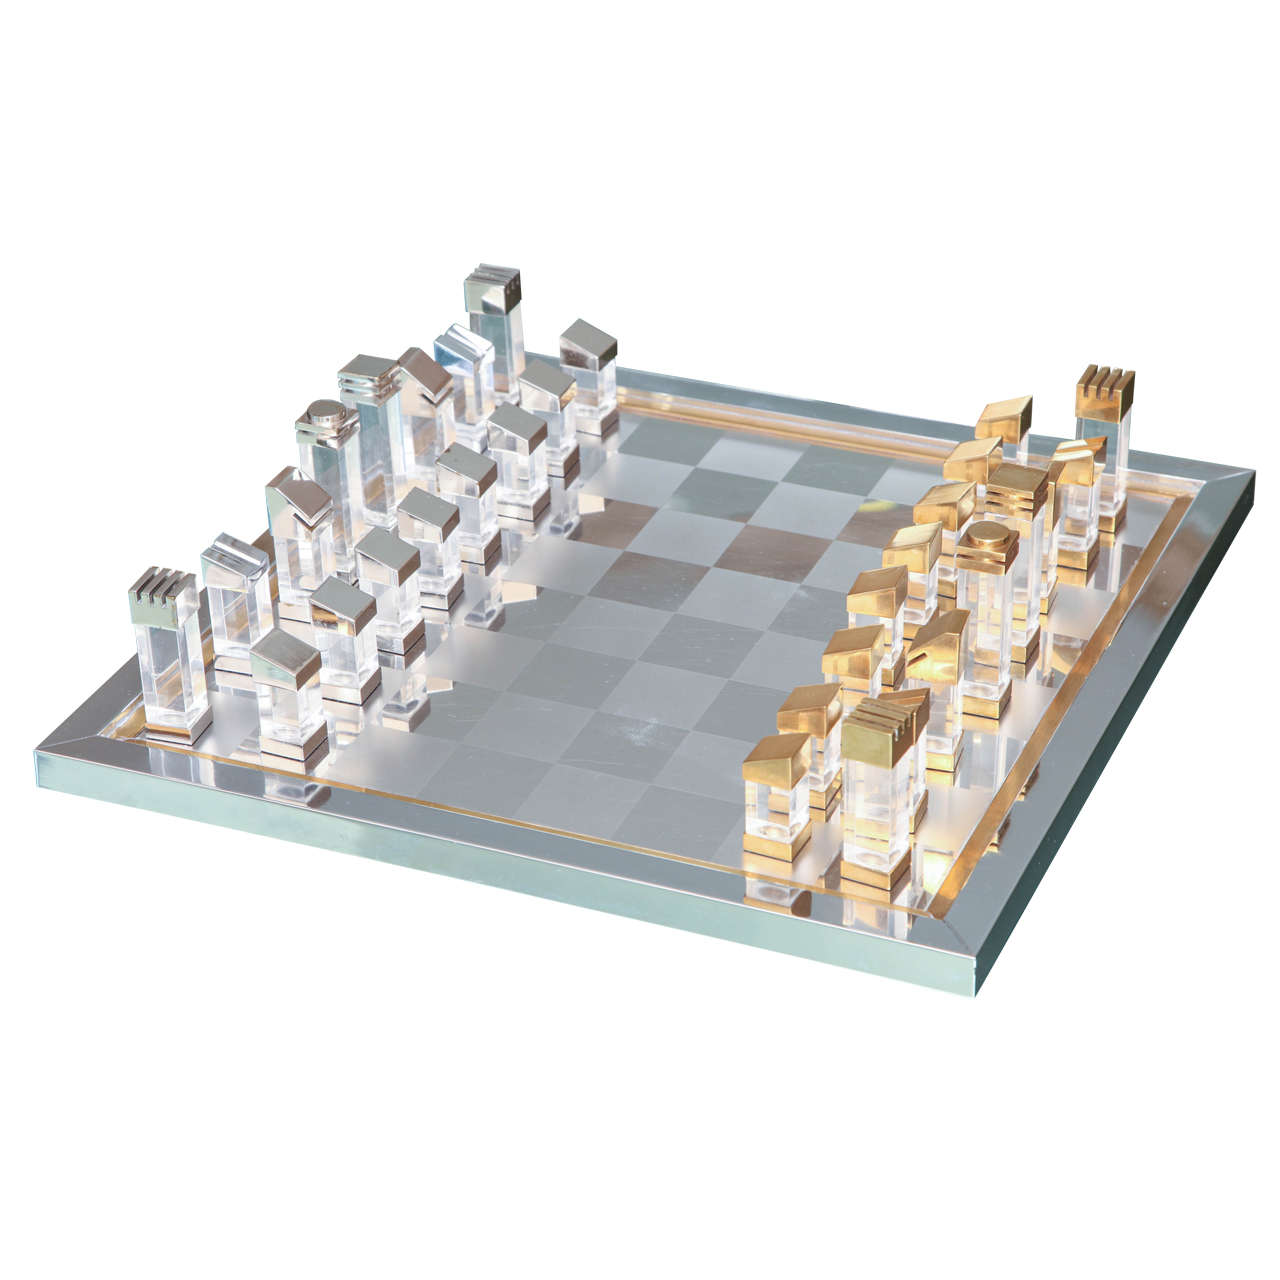 Romeo Rega Chess Set in Lucite, Brass and Chrome